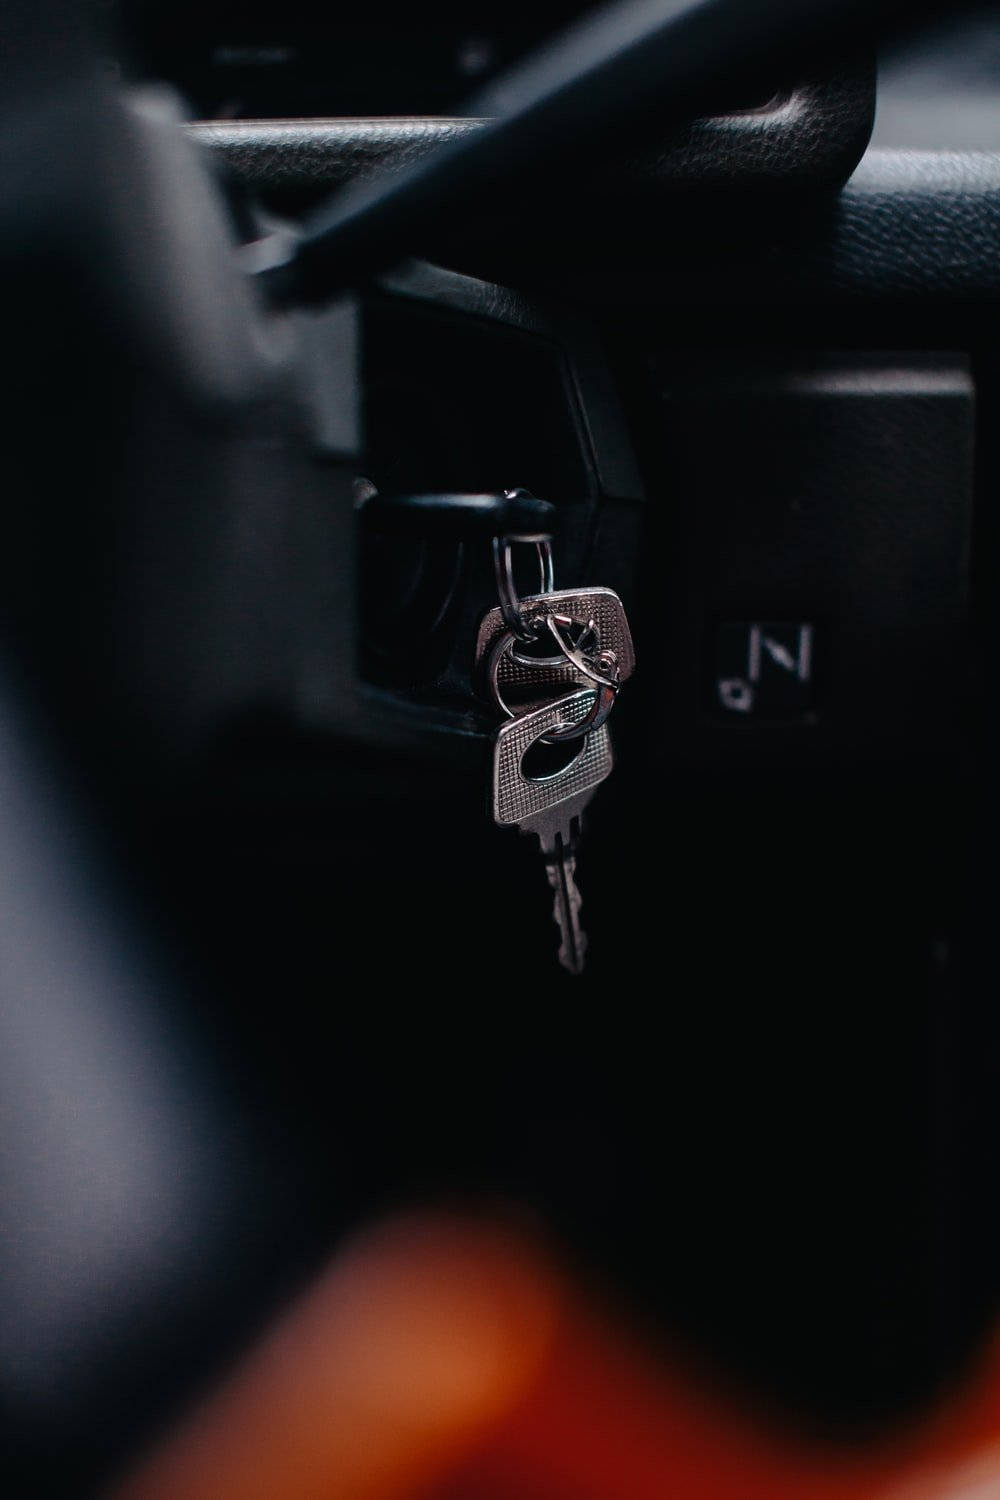 Inside keys